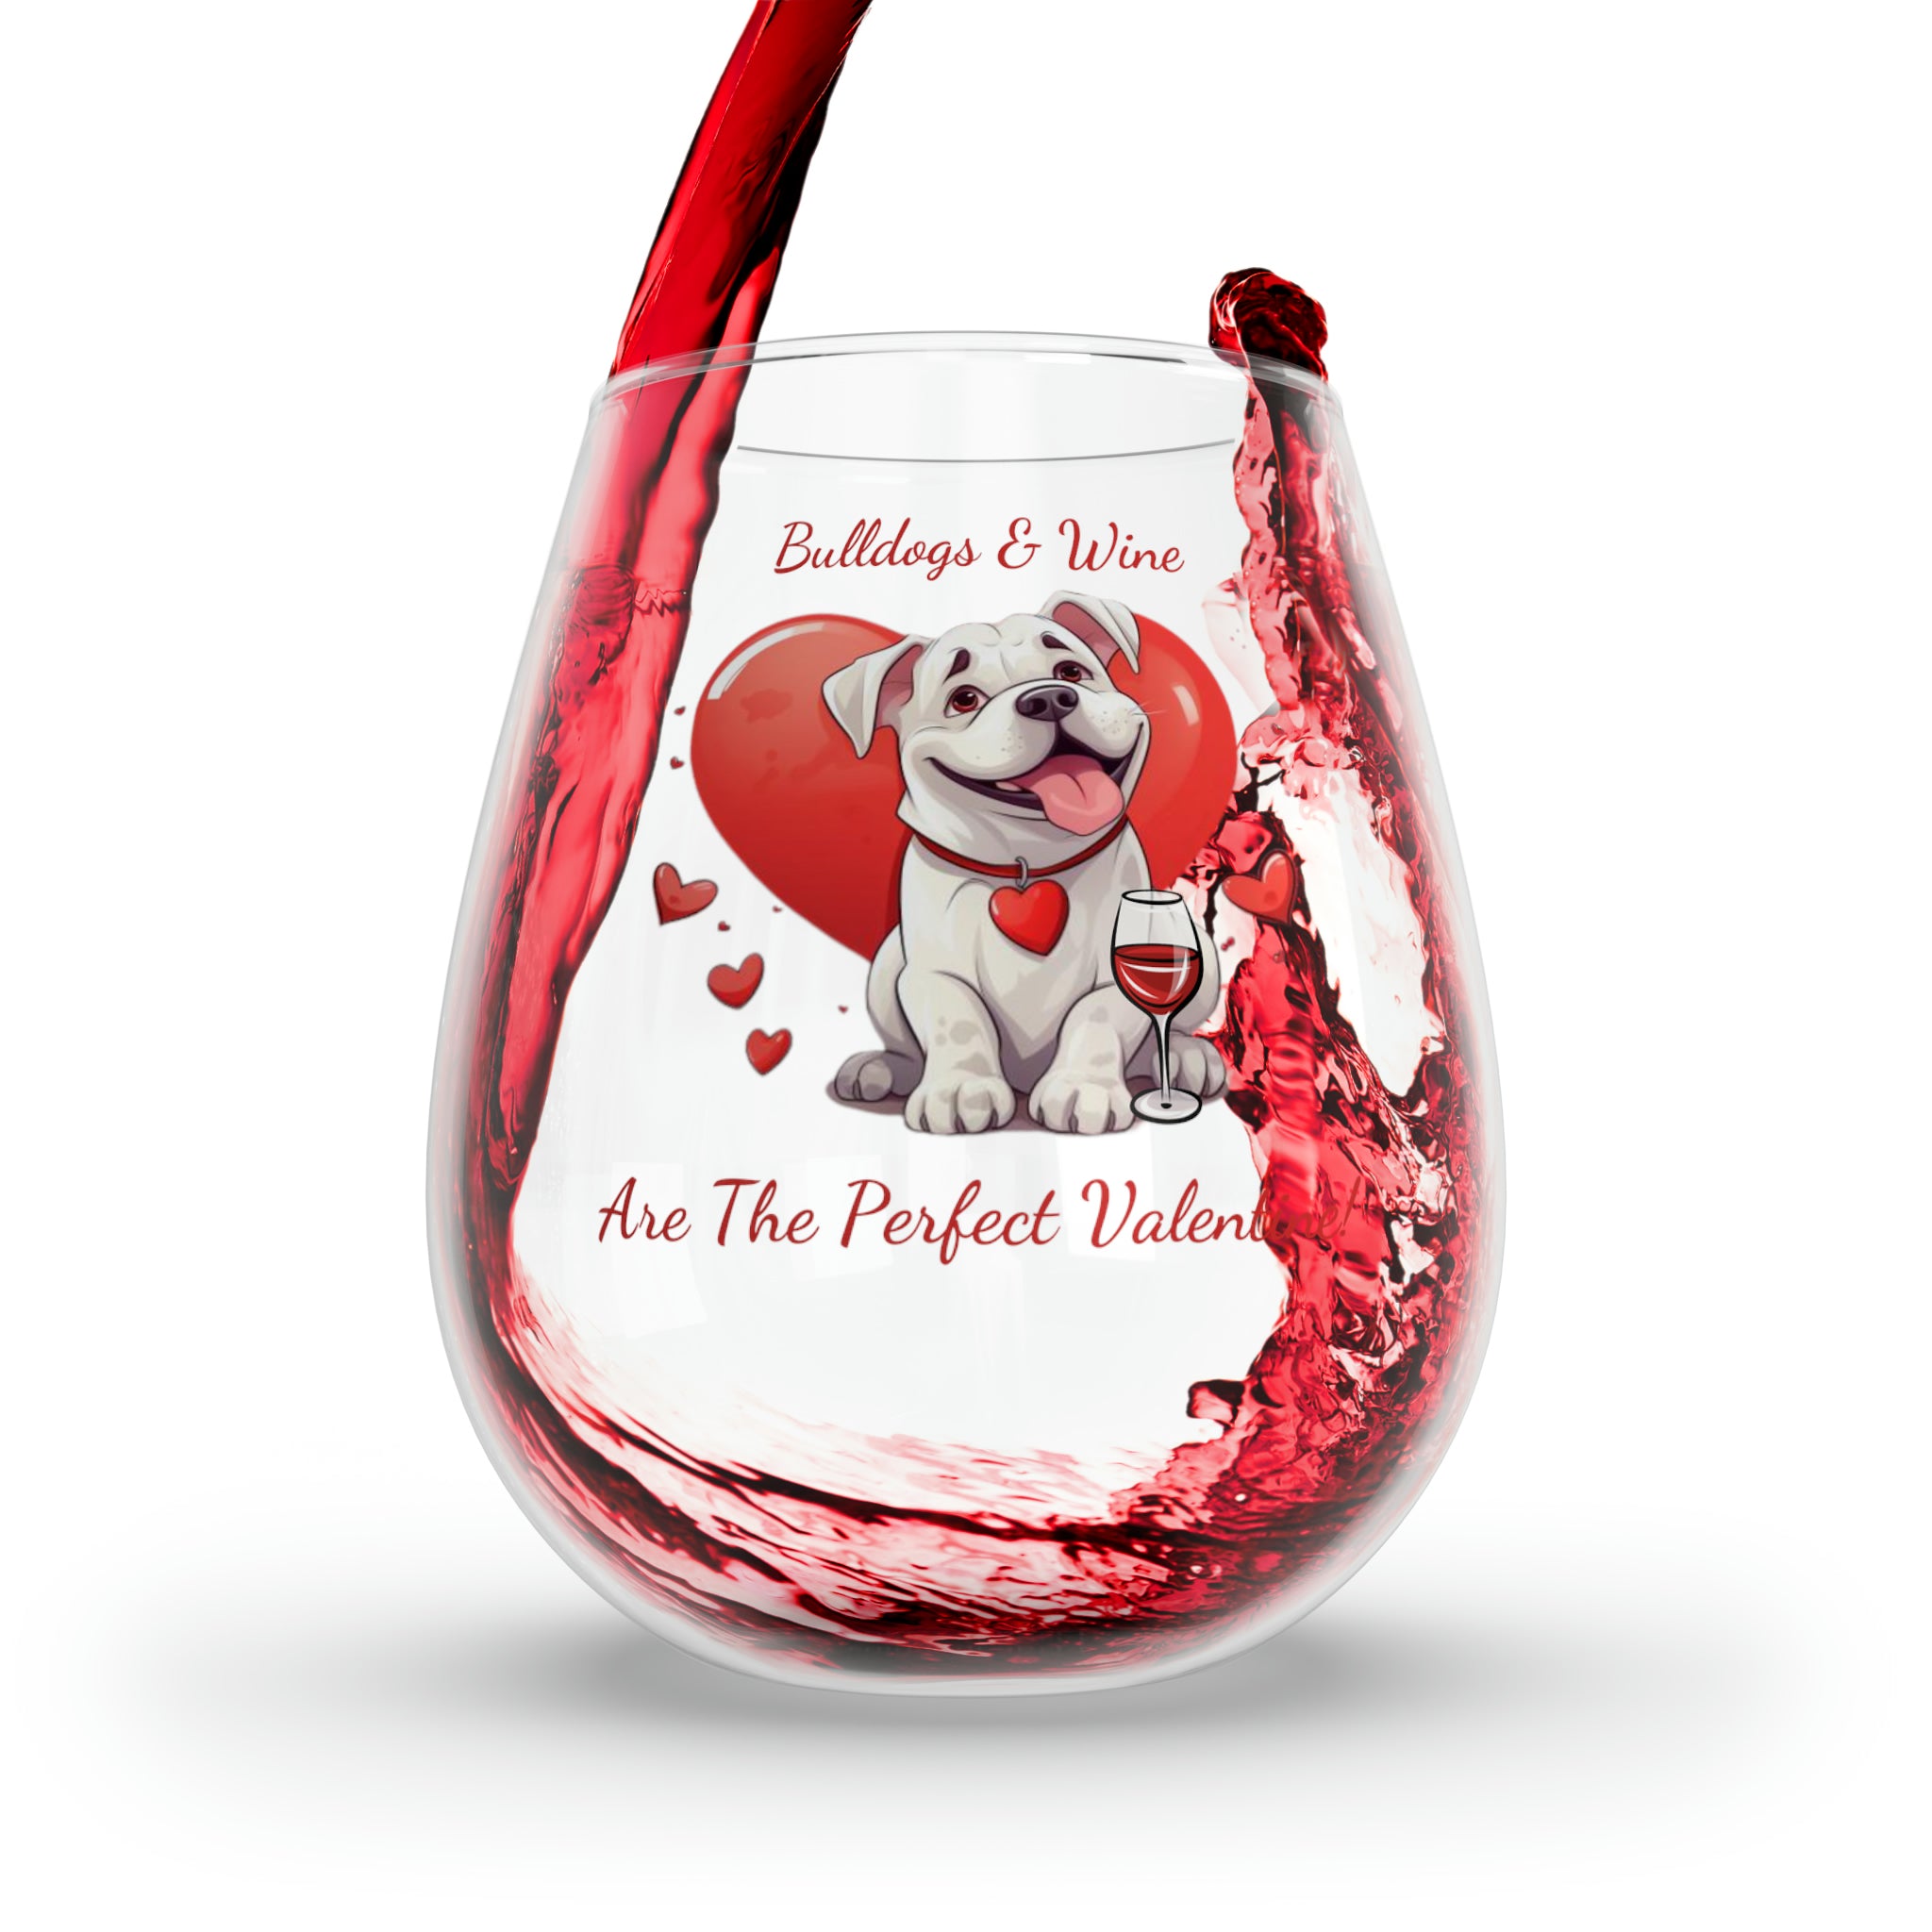 Bulldogs & Wine Are the Perfect Valentine! Stemless Wine Glass - English Bulldog